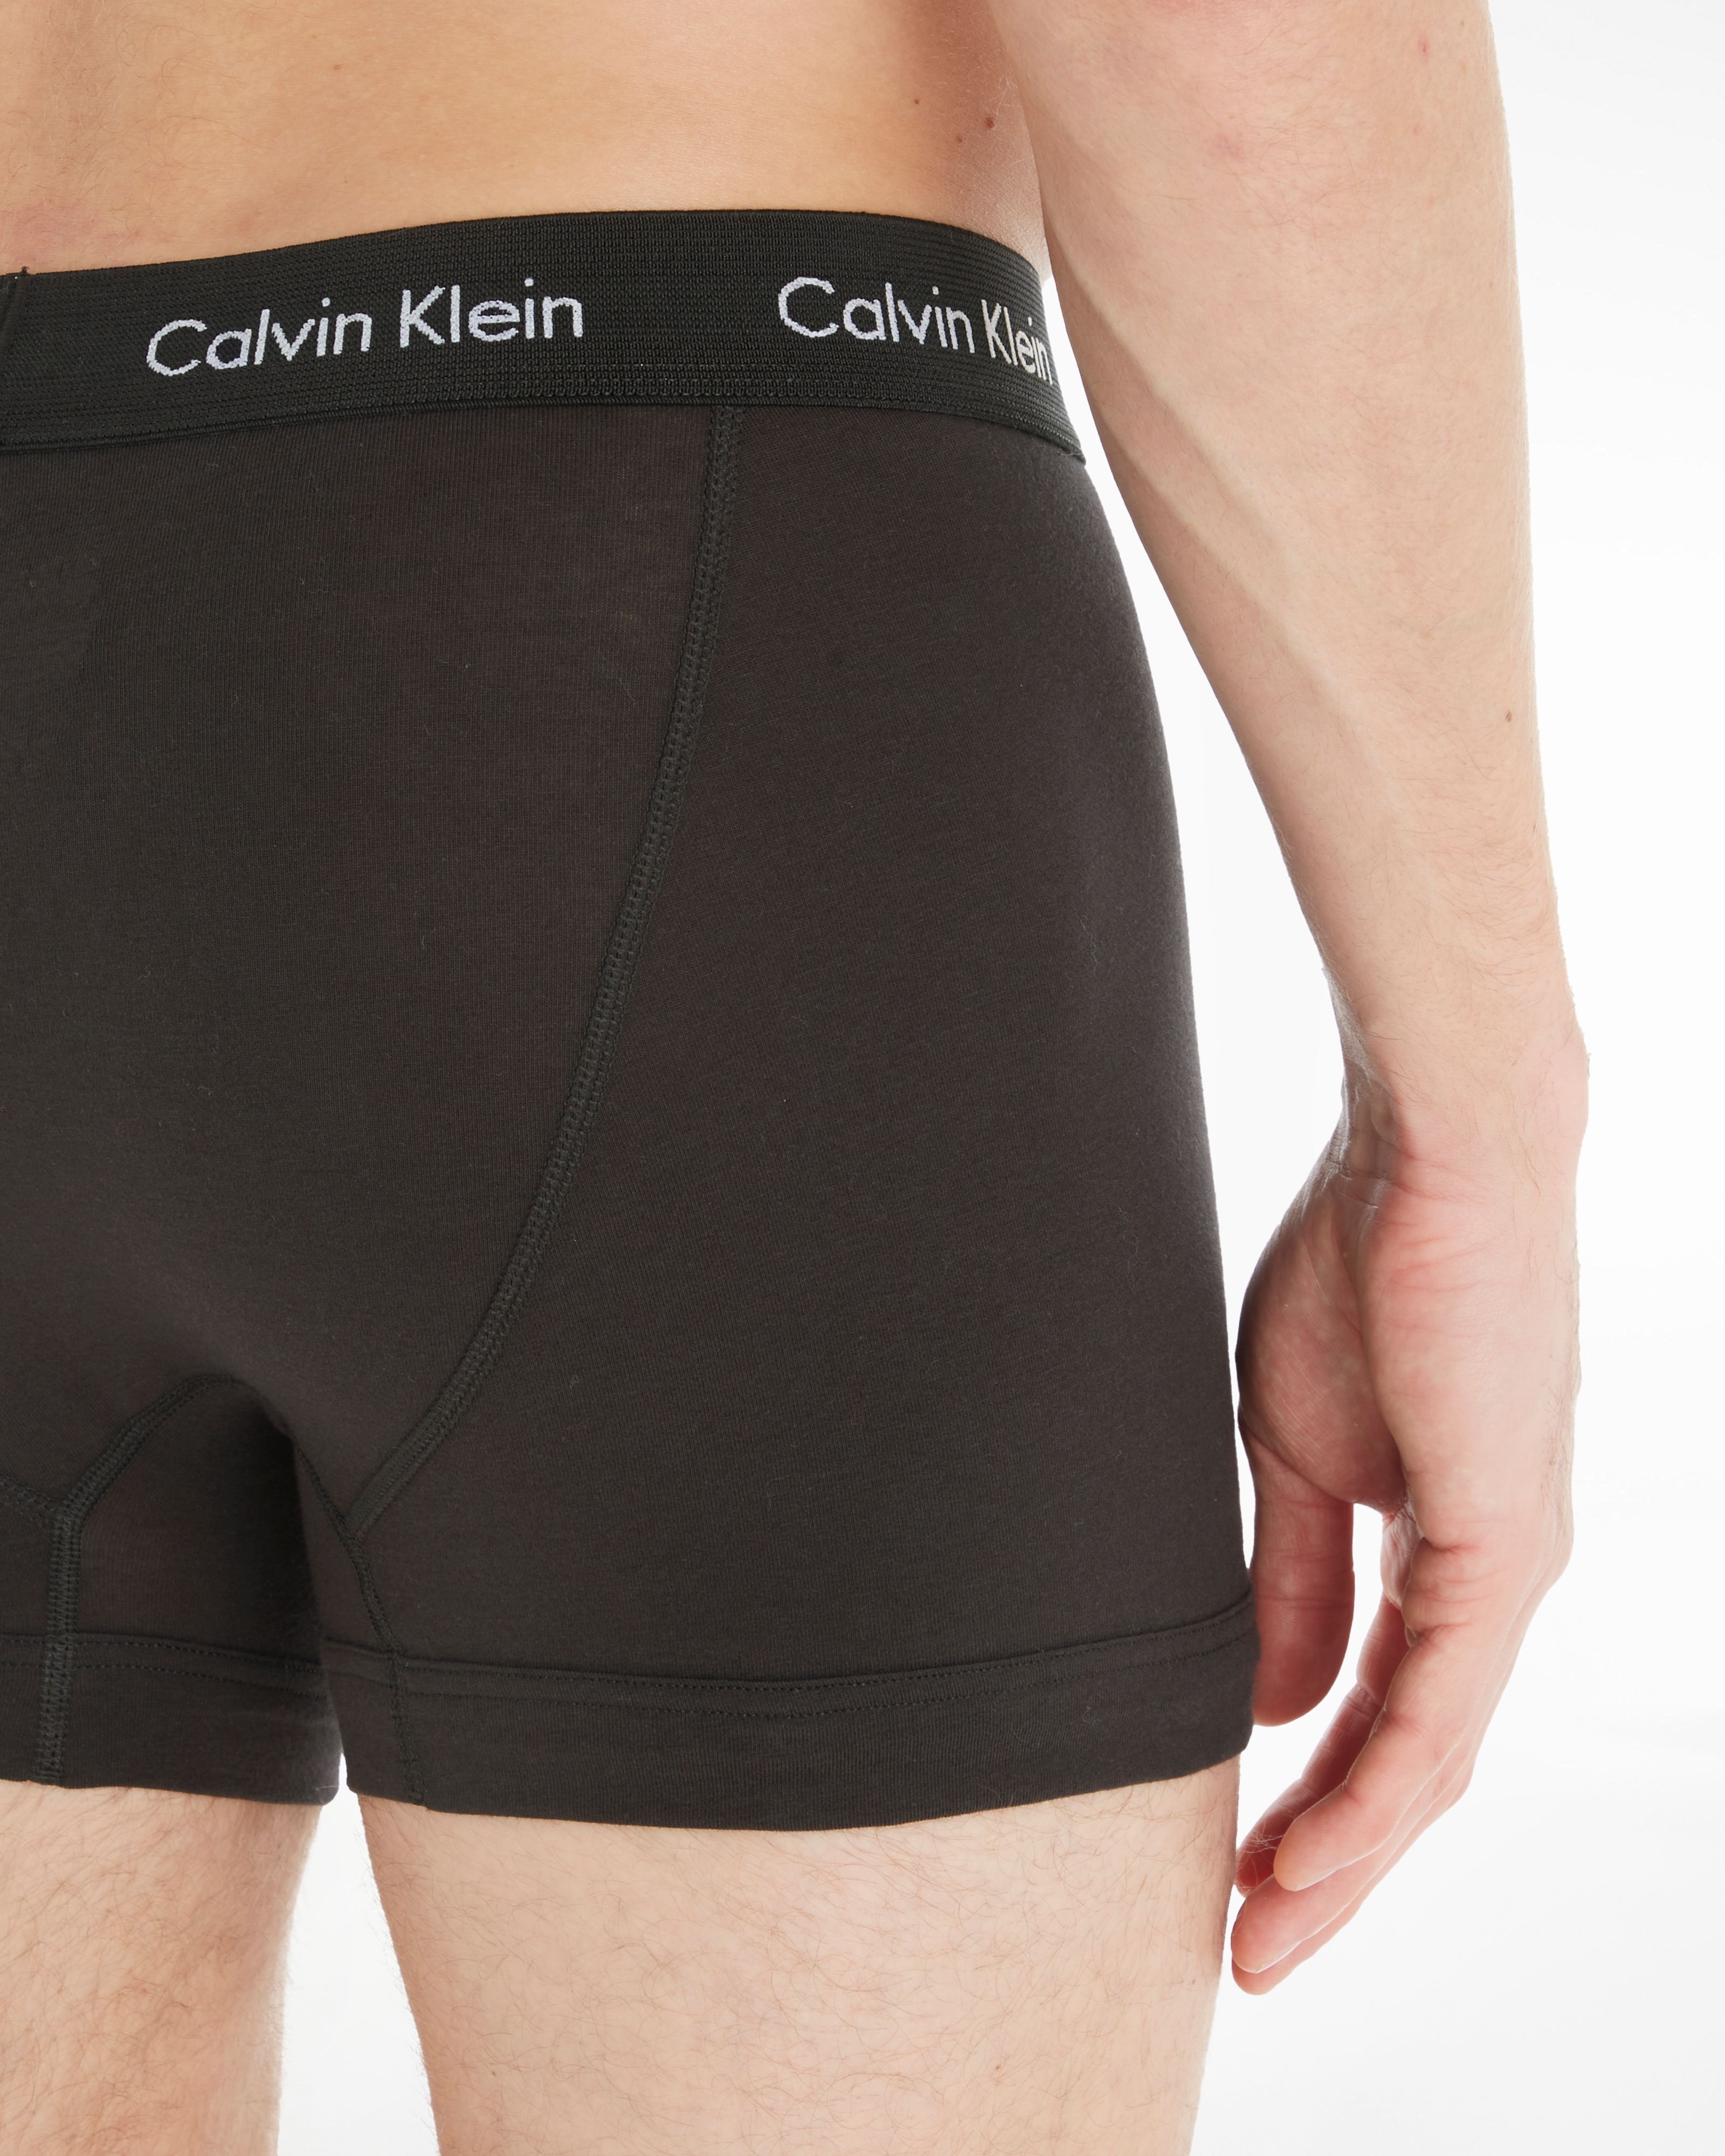 Calvin Klein Menswear Boxershort 3-pack Blauw 092206-001-L